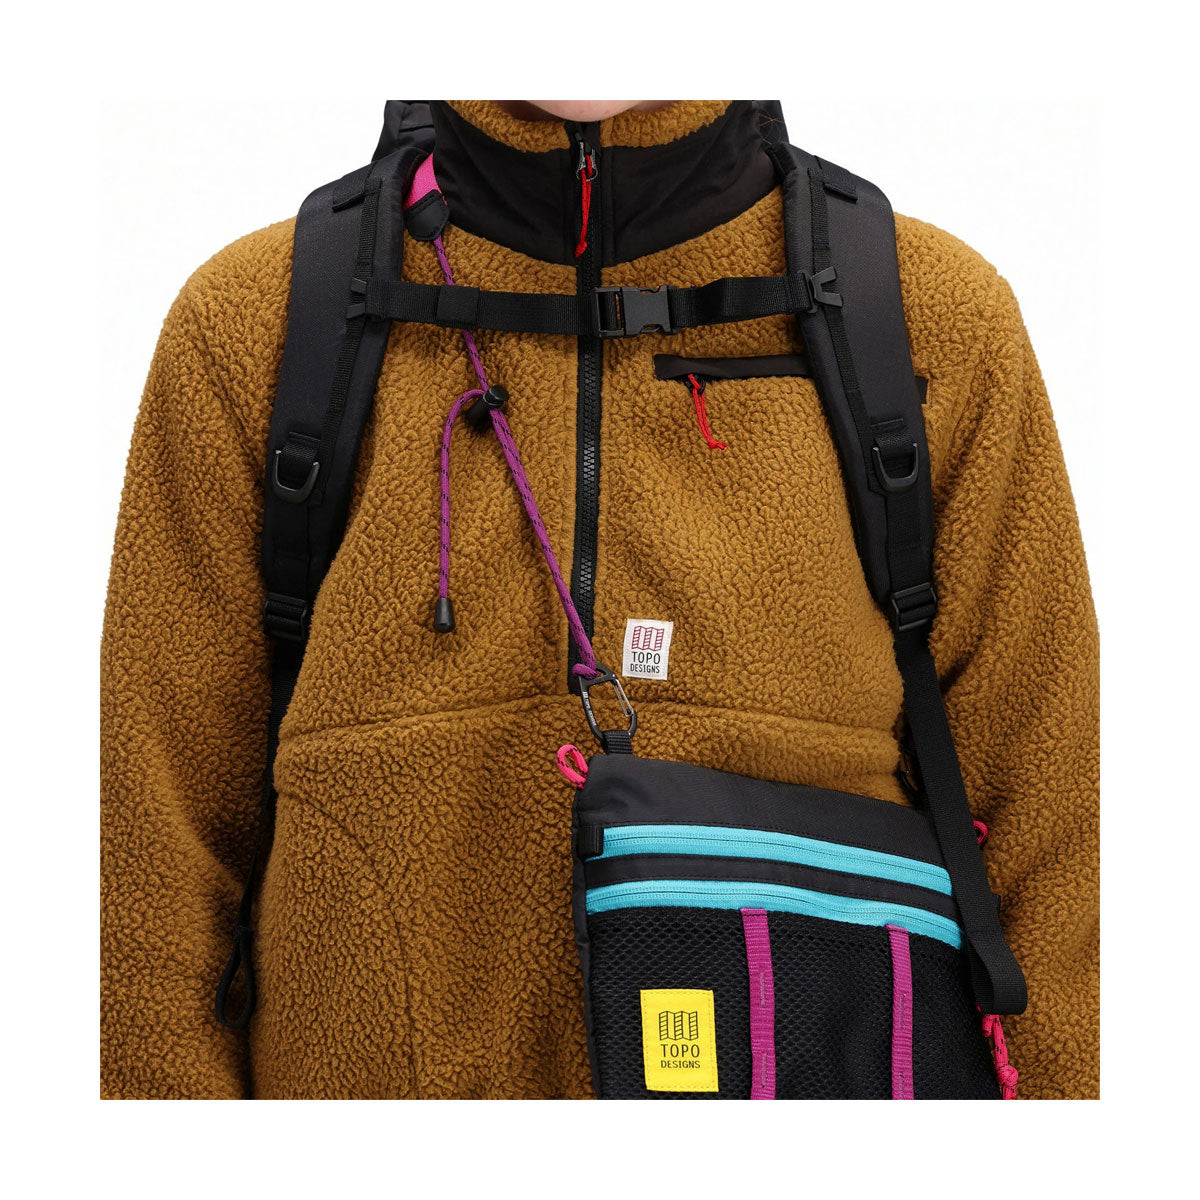 Topo Designs : Mountain Accessory Shoulder Bag : Olive/Pond Blue